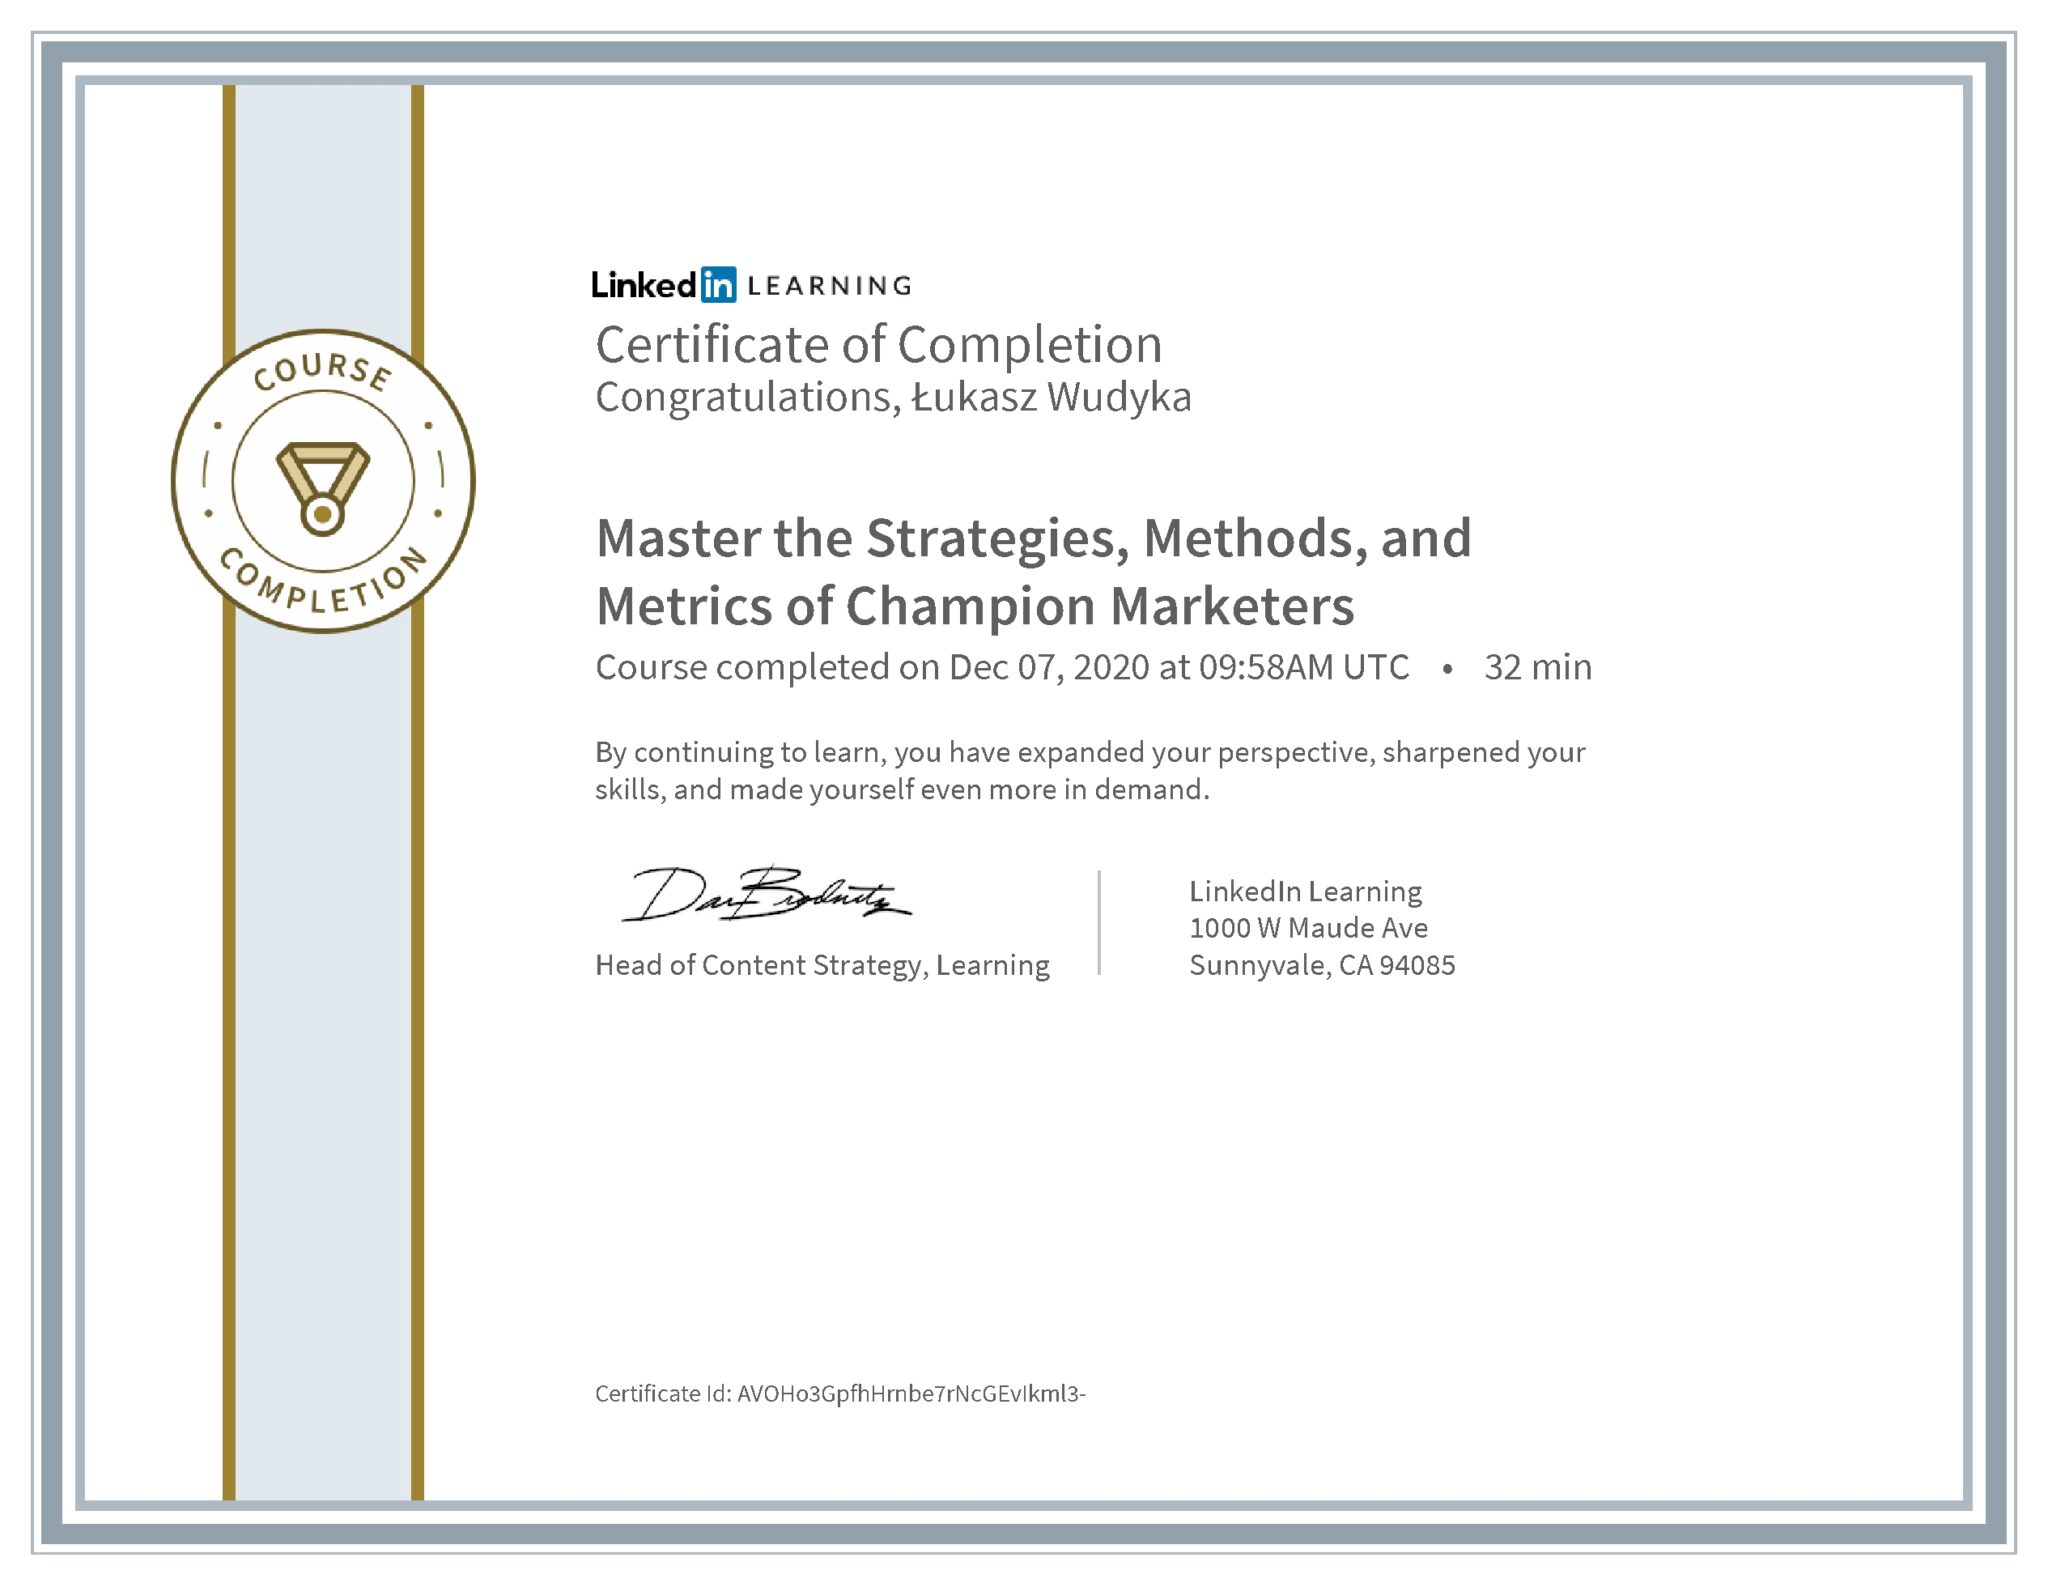 Łukasz Wudyka certyfikat LinkedIn Master the Strategies, Methods, and Metrics of Champion Marketers